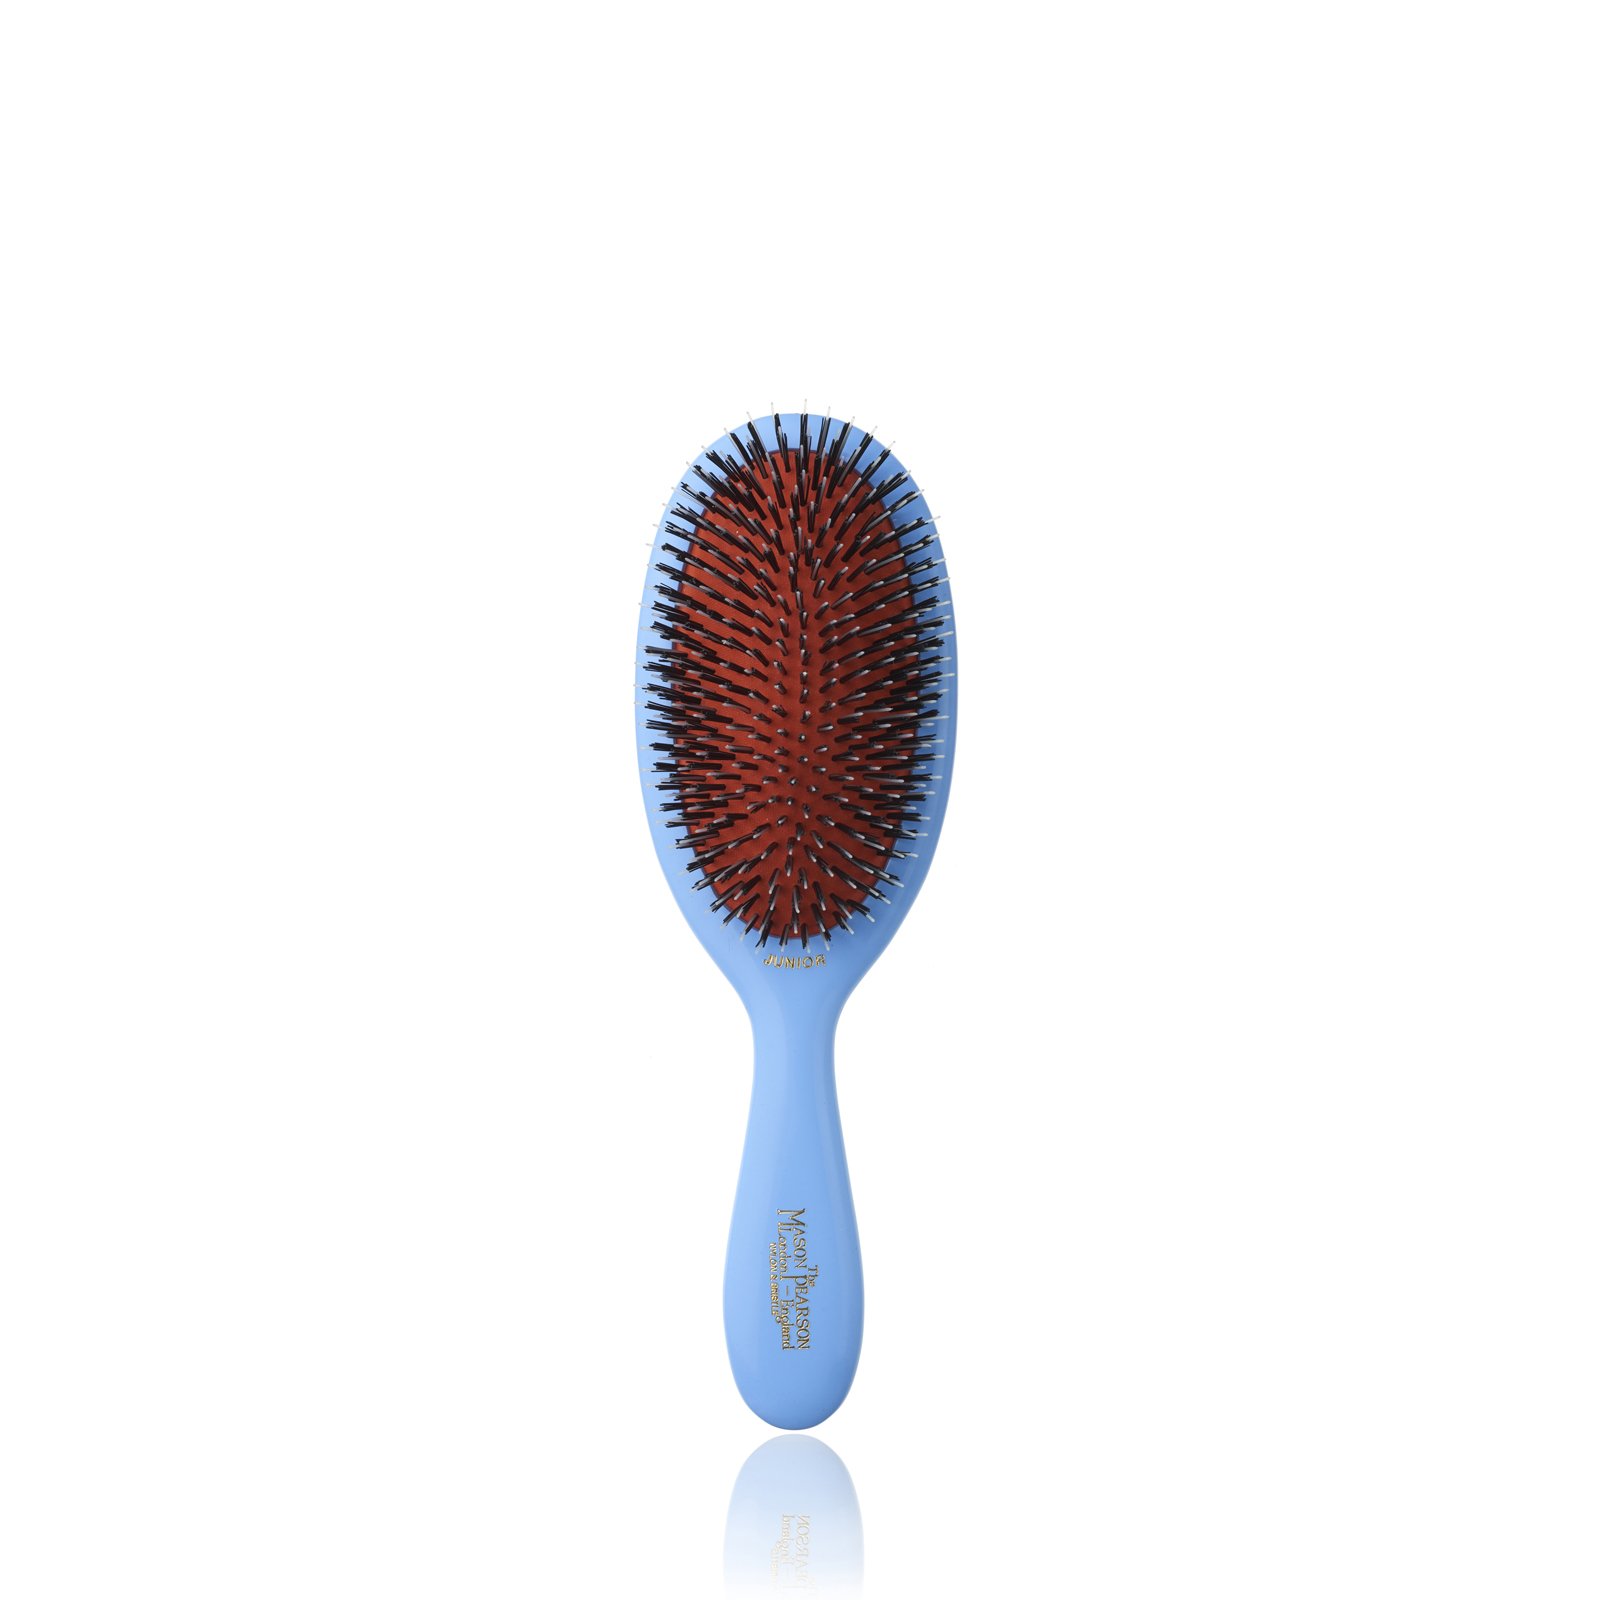 sized Medium | (Blue) Junior Mason Pearson Hairbrush BN2